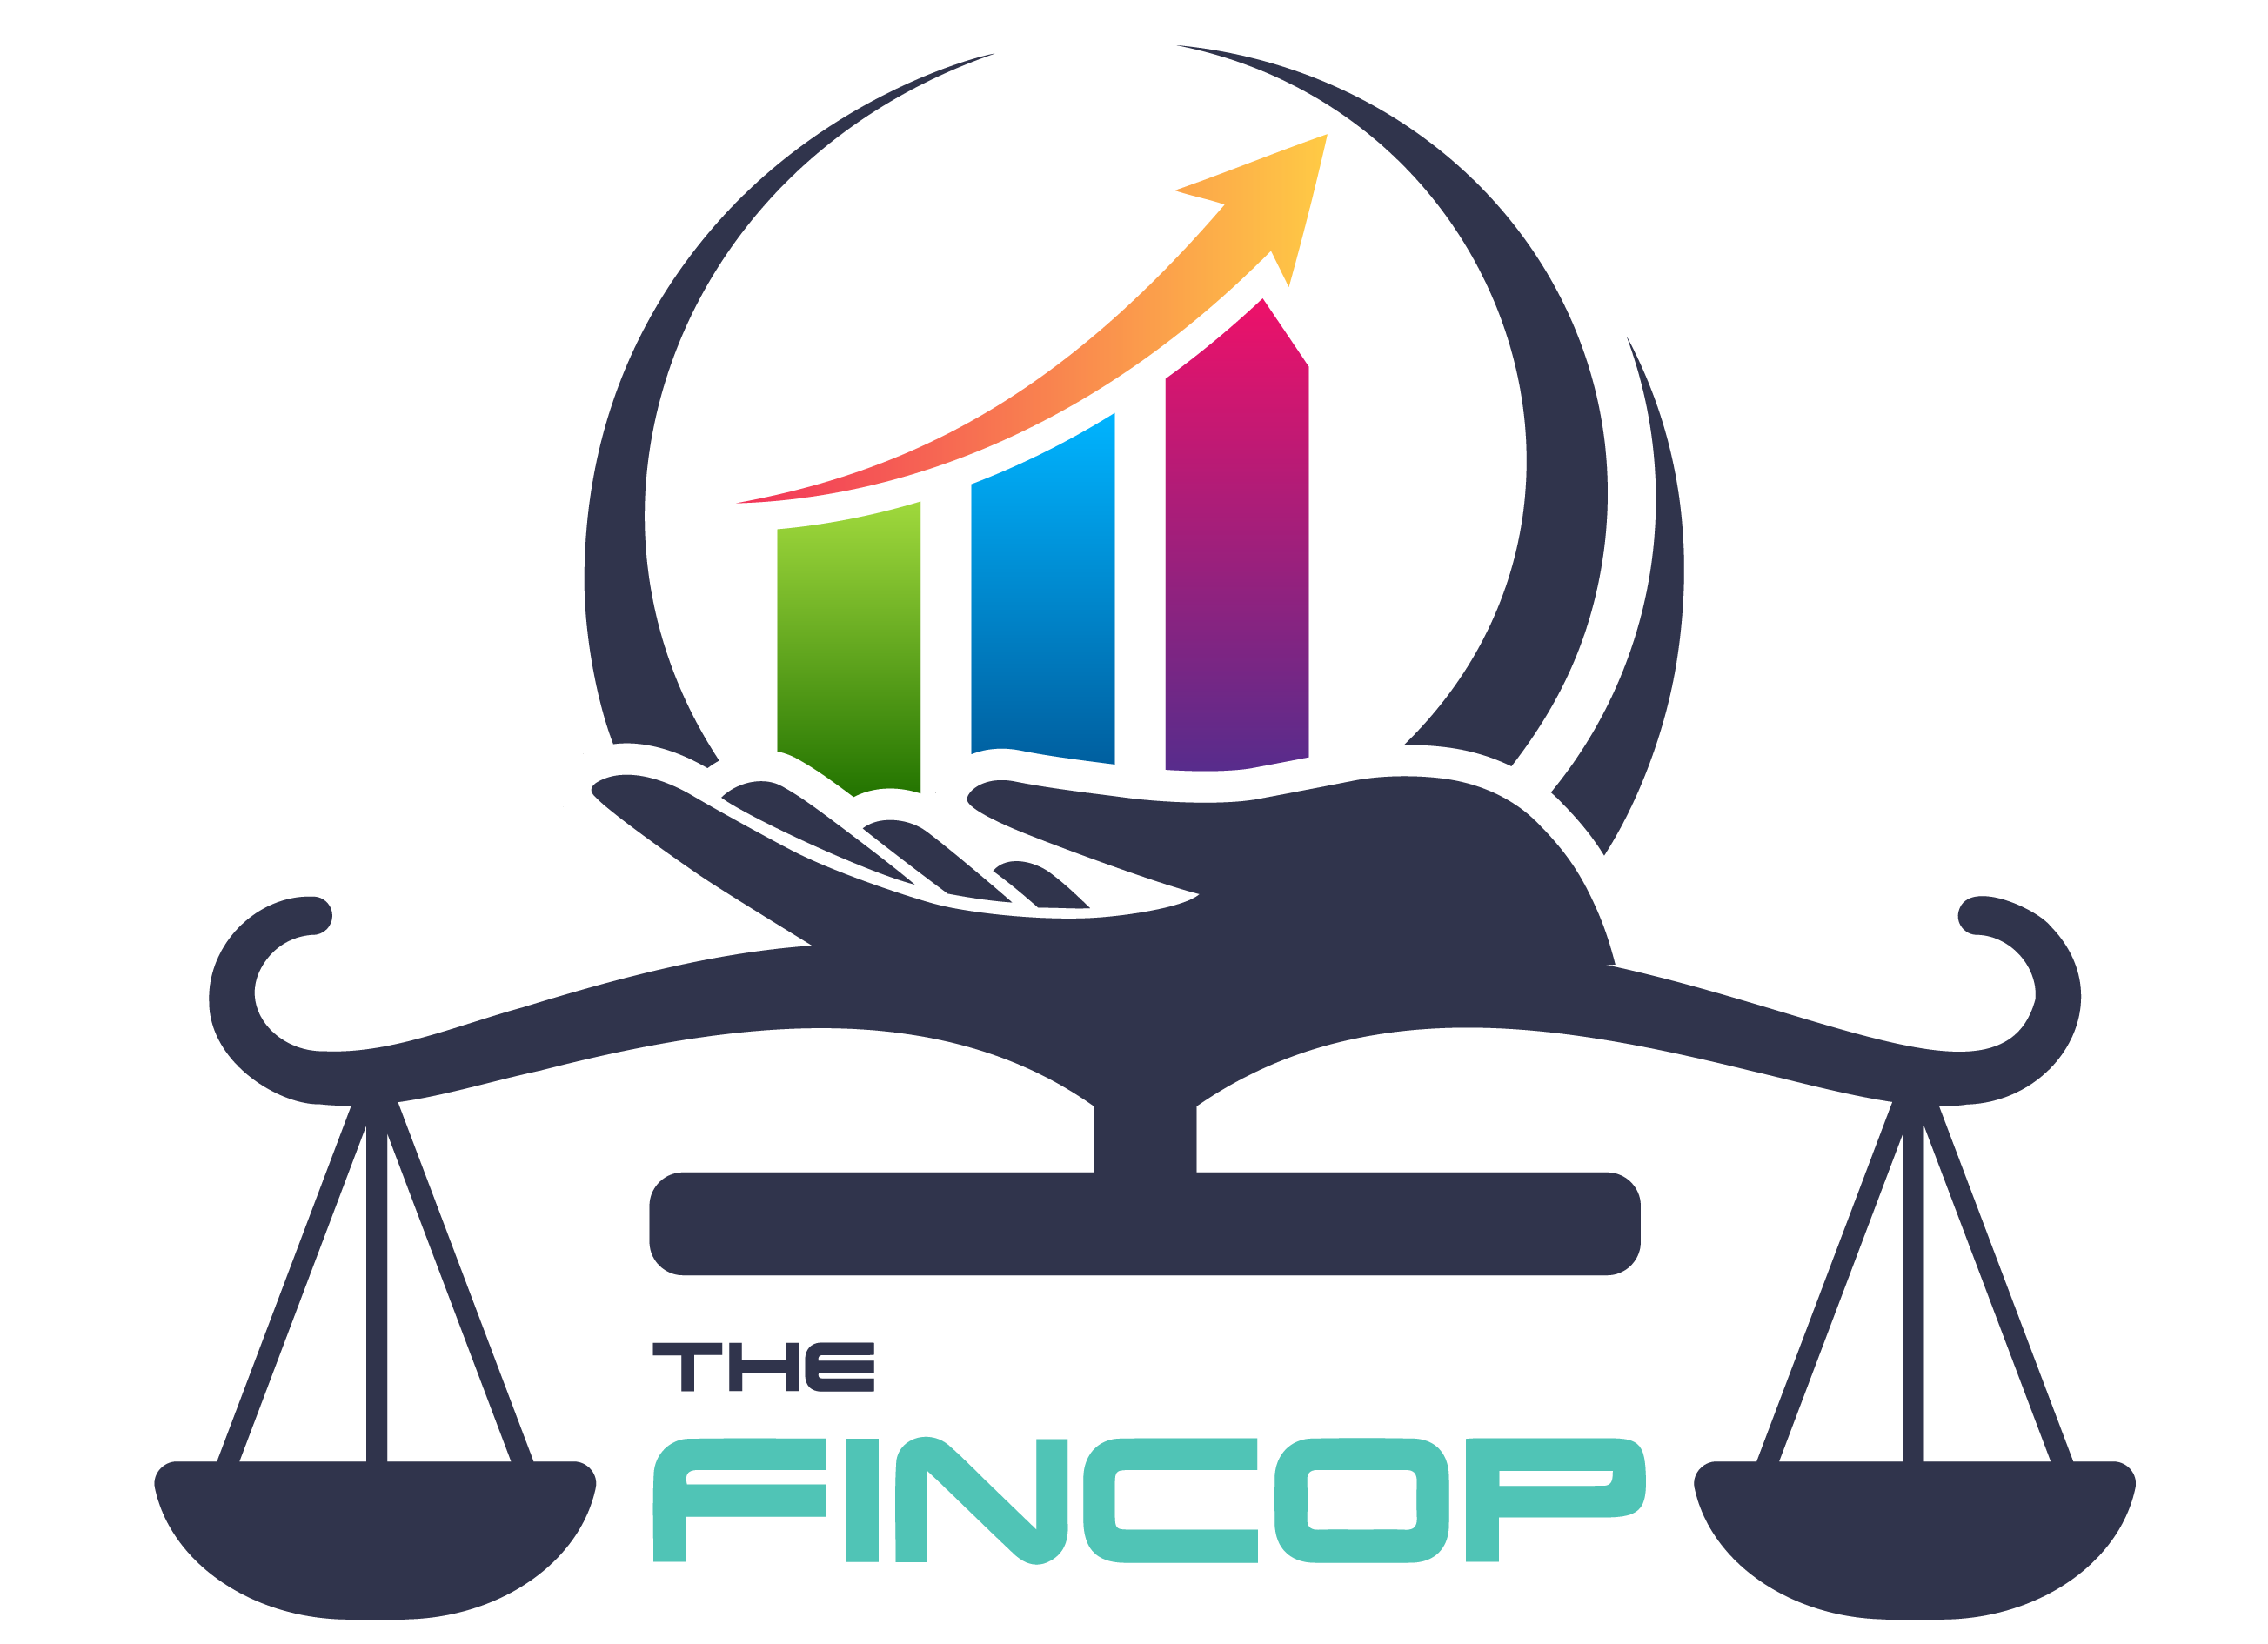 The FinCop